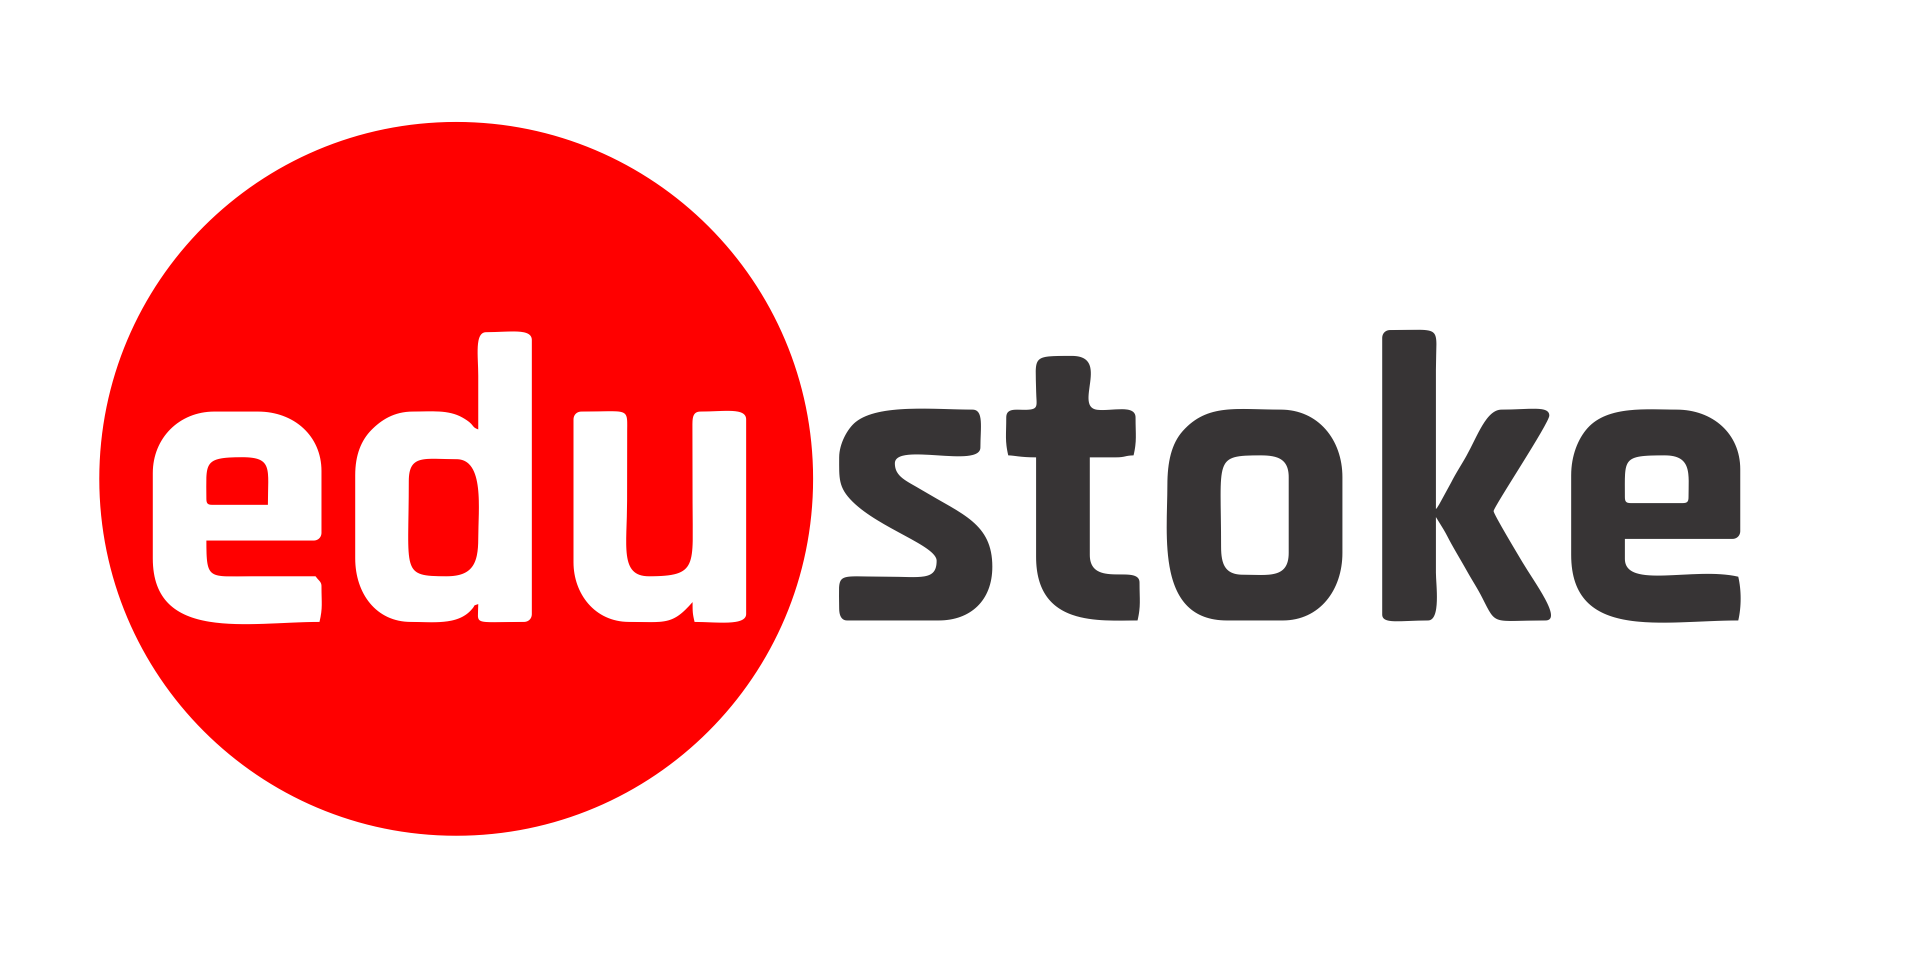 Edustoke Logo_final